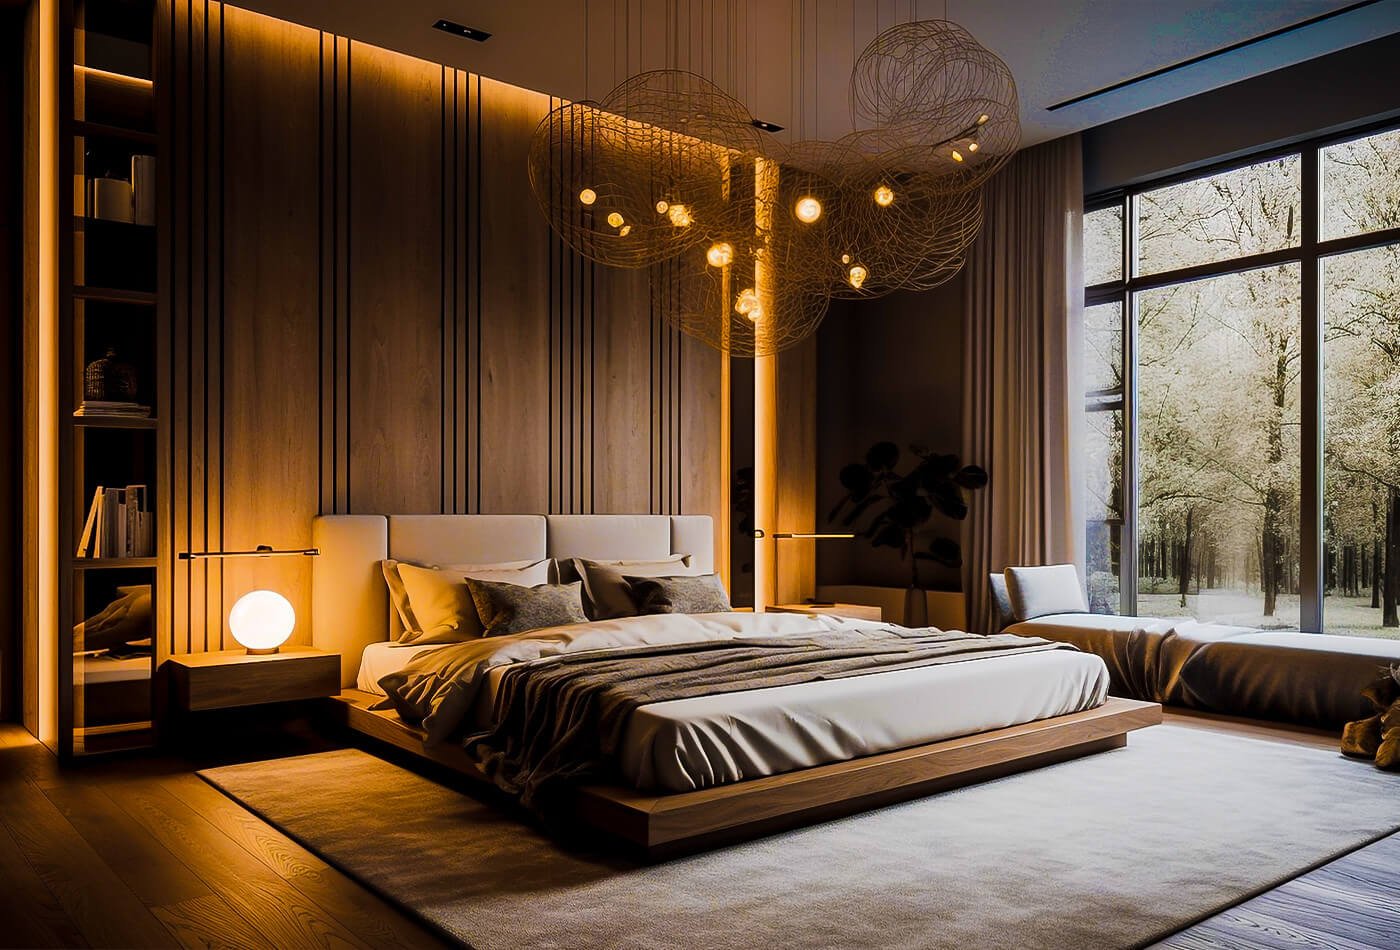 Contemporary Master Bedroom Design With Golden Metallic Detailing